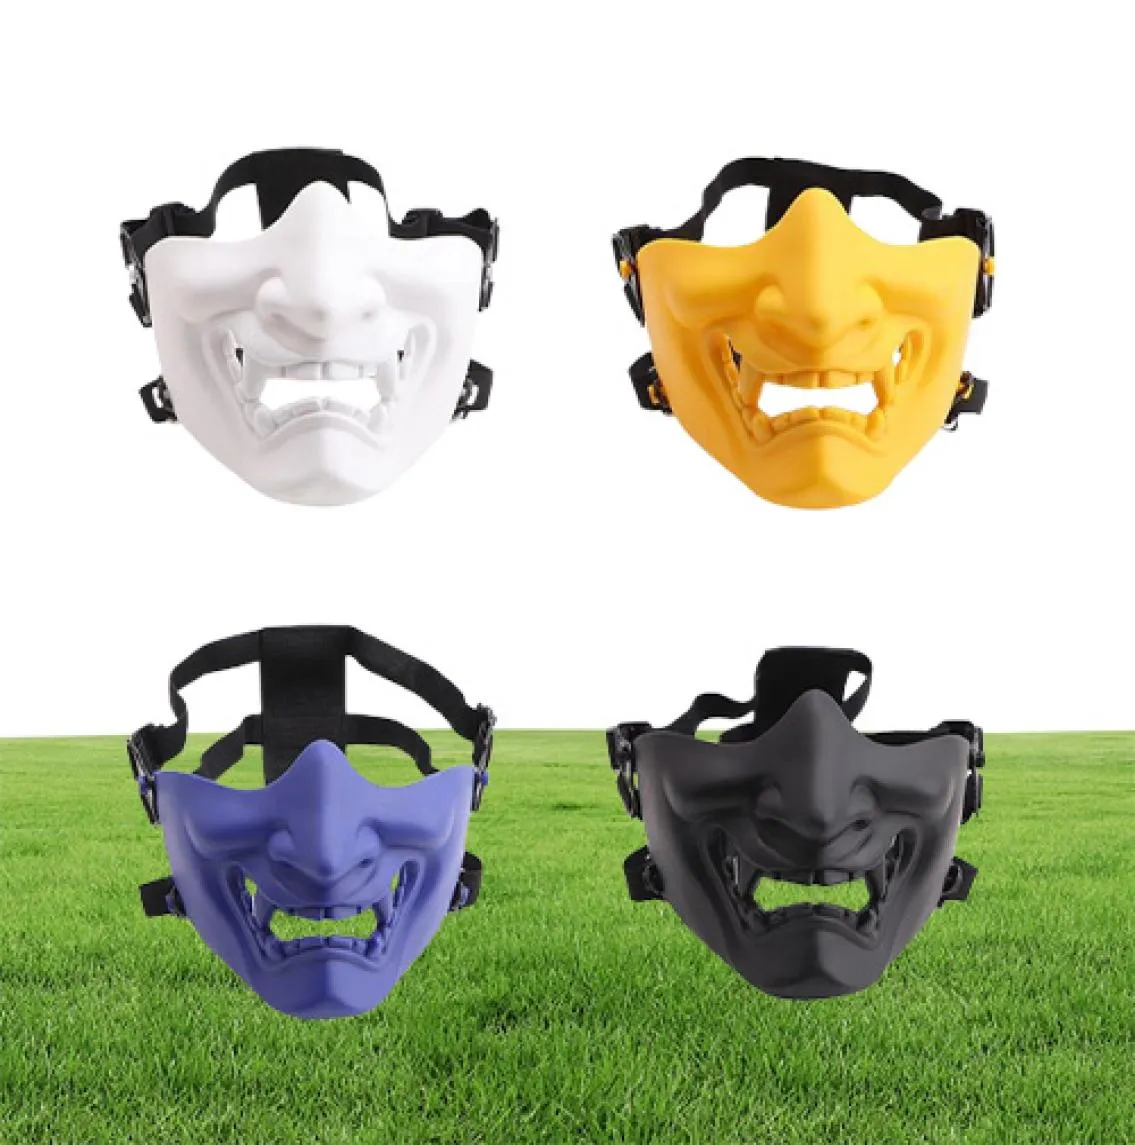 Assustador sorridente fantasma meia máscara facial forma ajustável tático headwear proteção trajes de halloween acessórios26934161654303